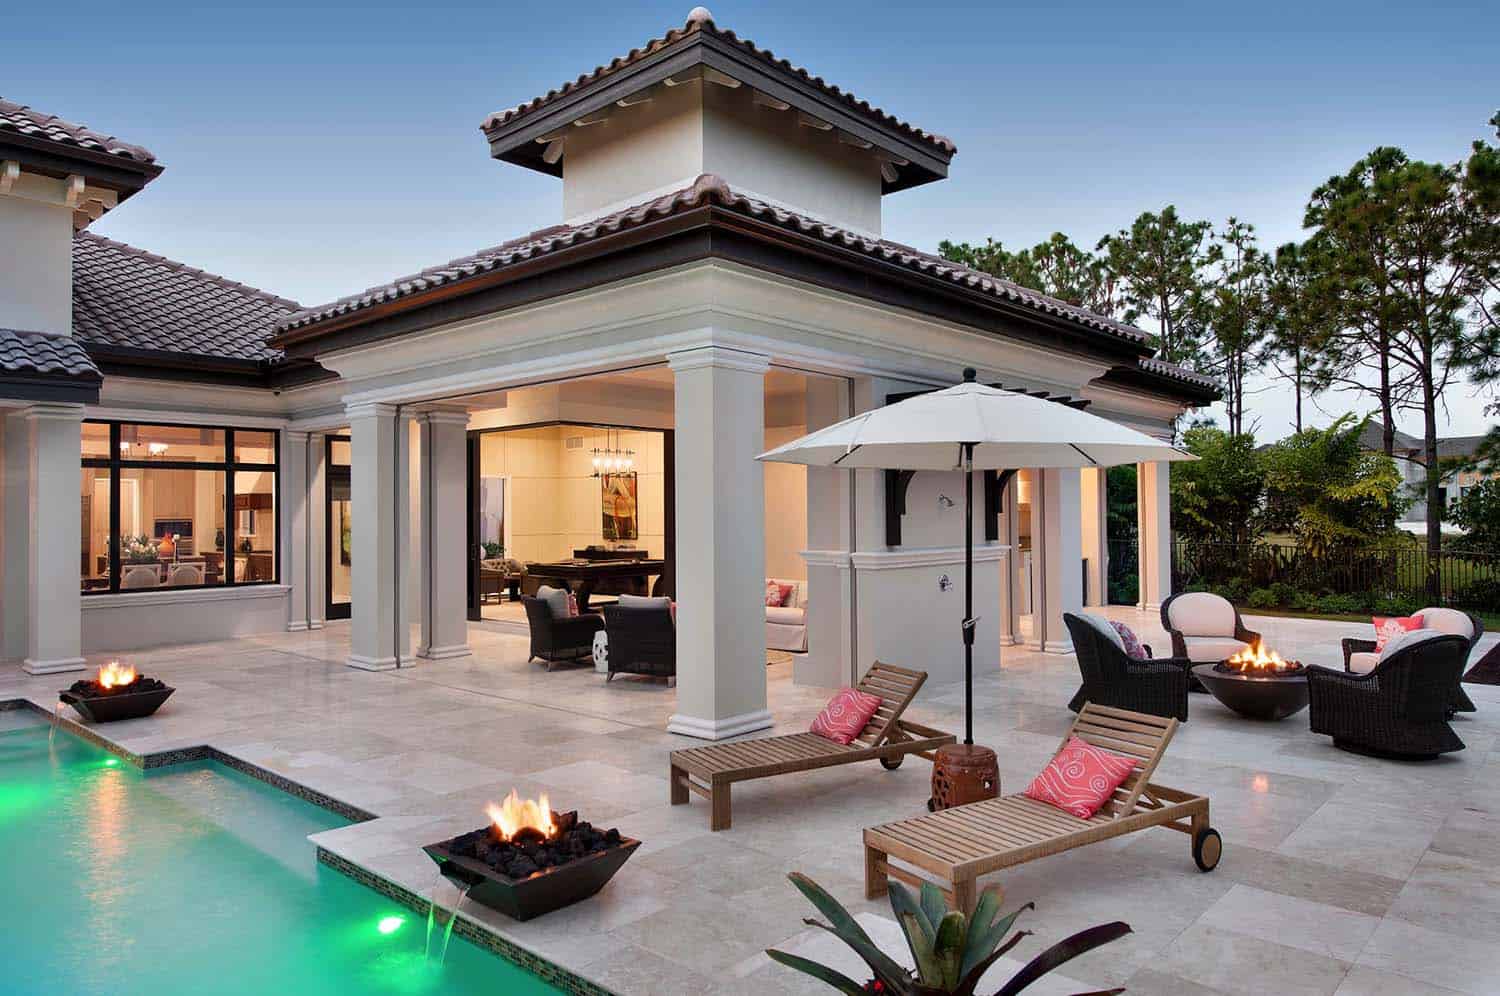 Casa Katrina features Mediterranean-inspired luxury in Naples, Florida